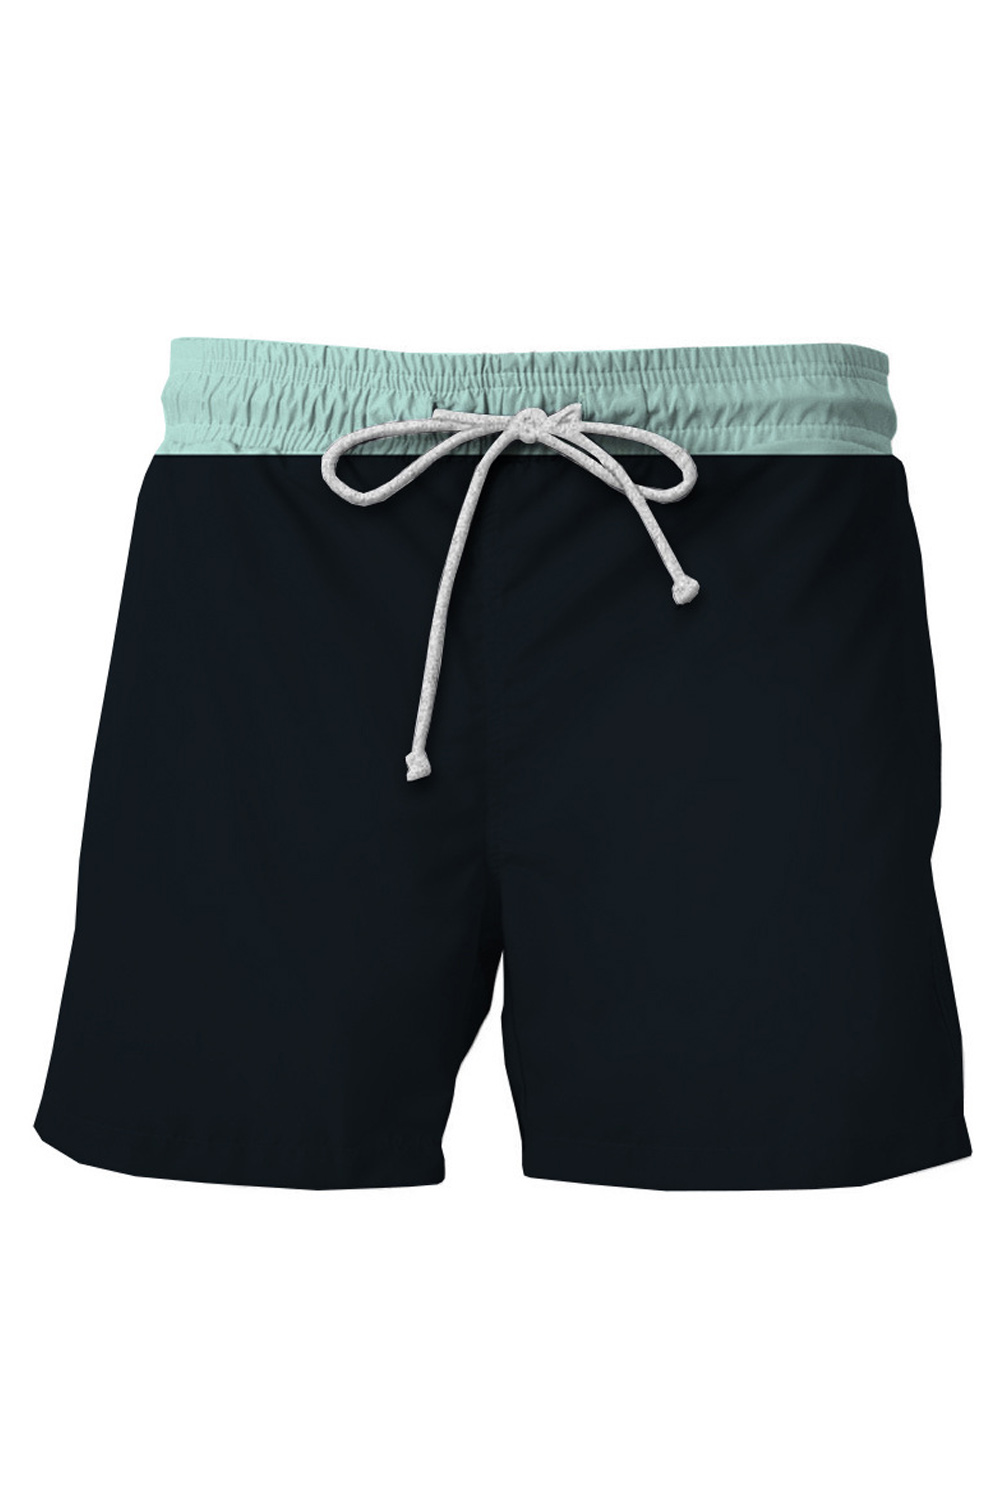 Unomatch Men Drawstring Waist Solid Colored Breathable Summer Elegant Soft Swimwear Short